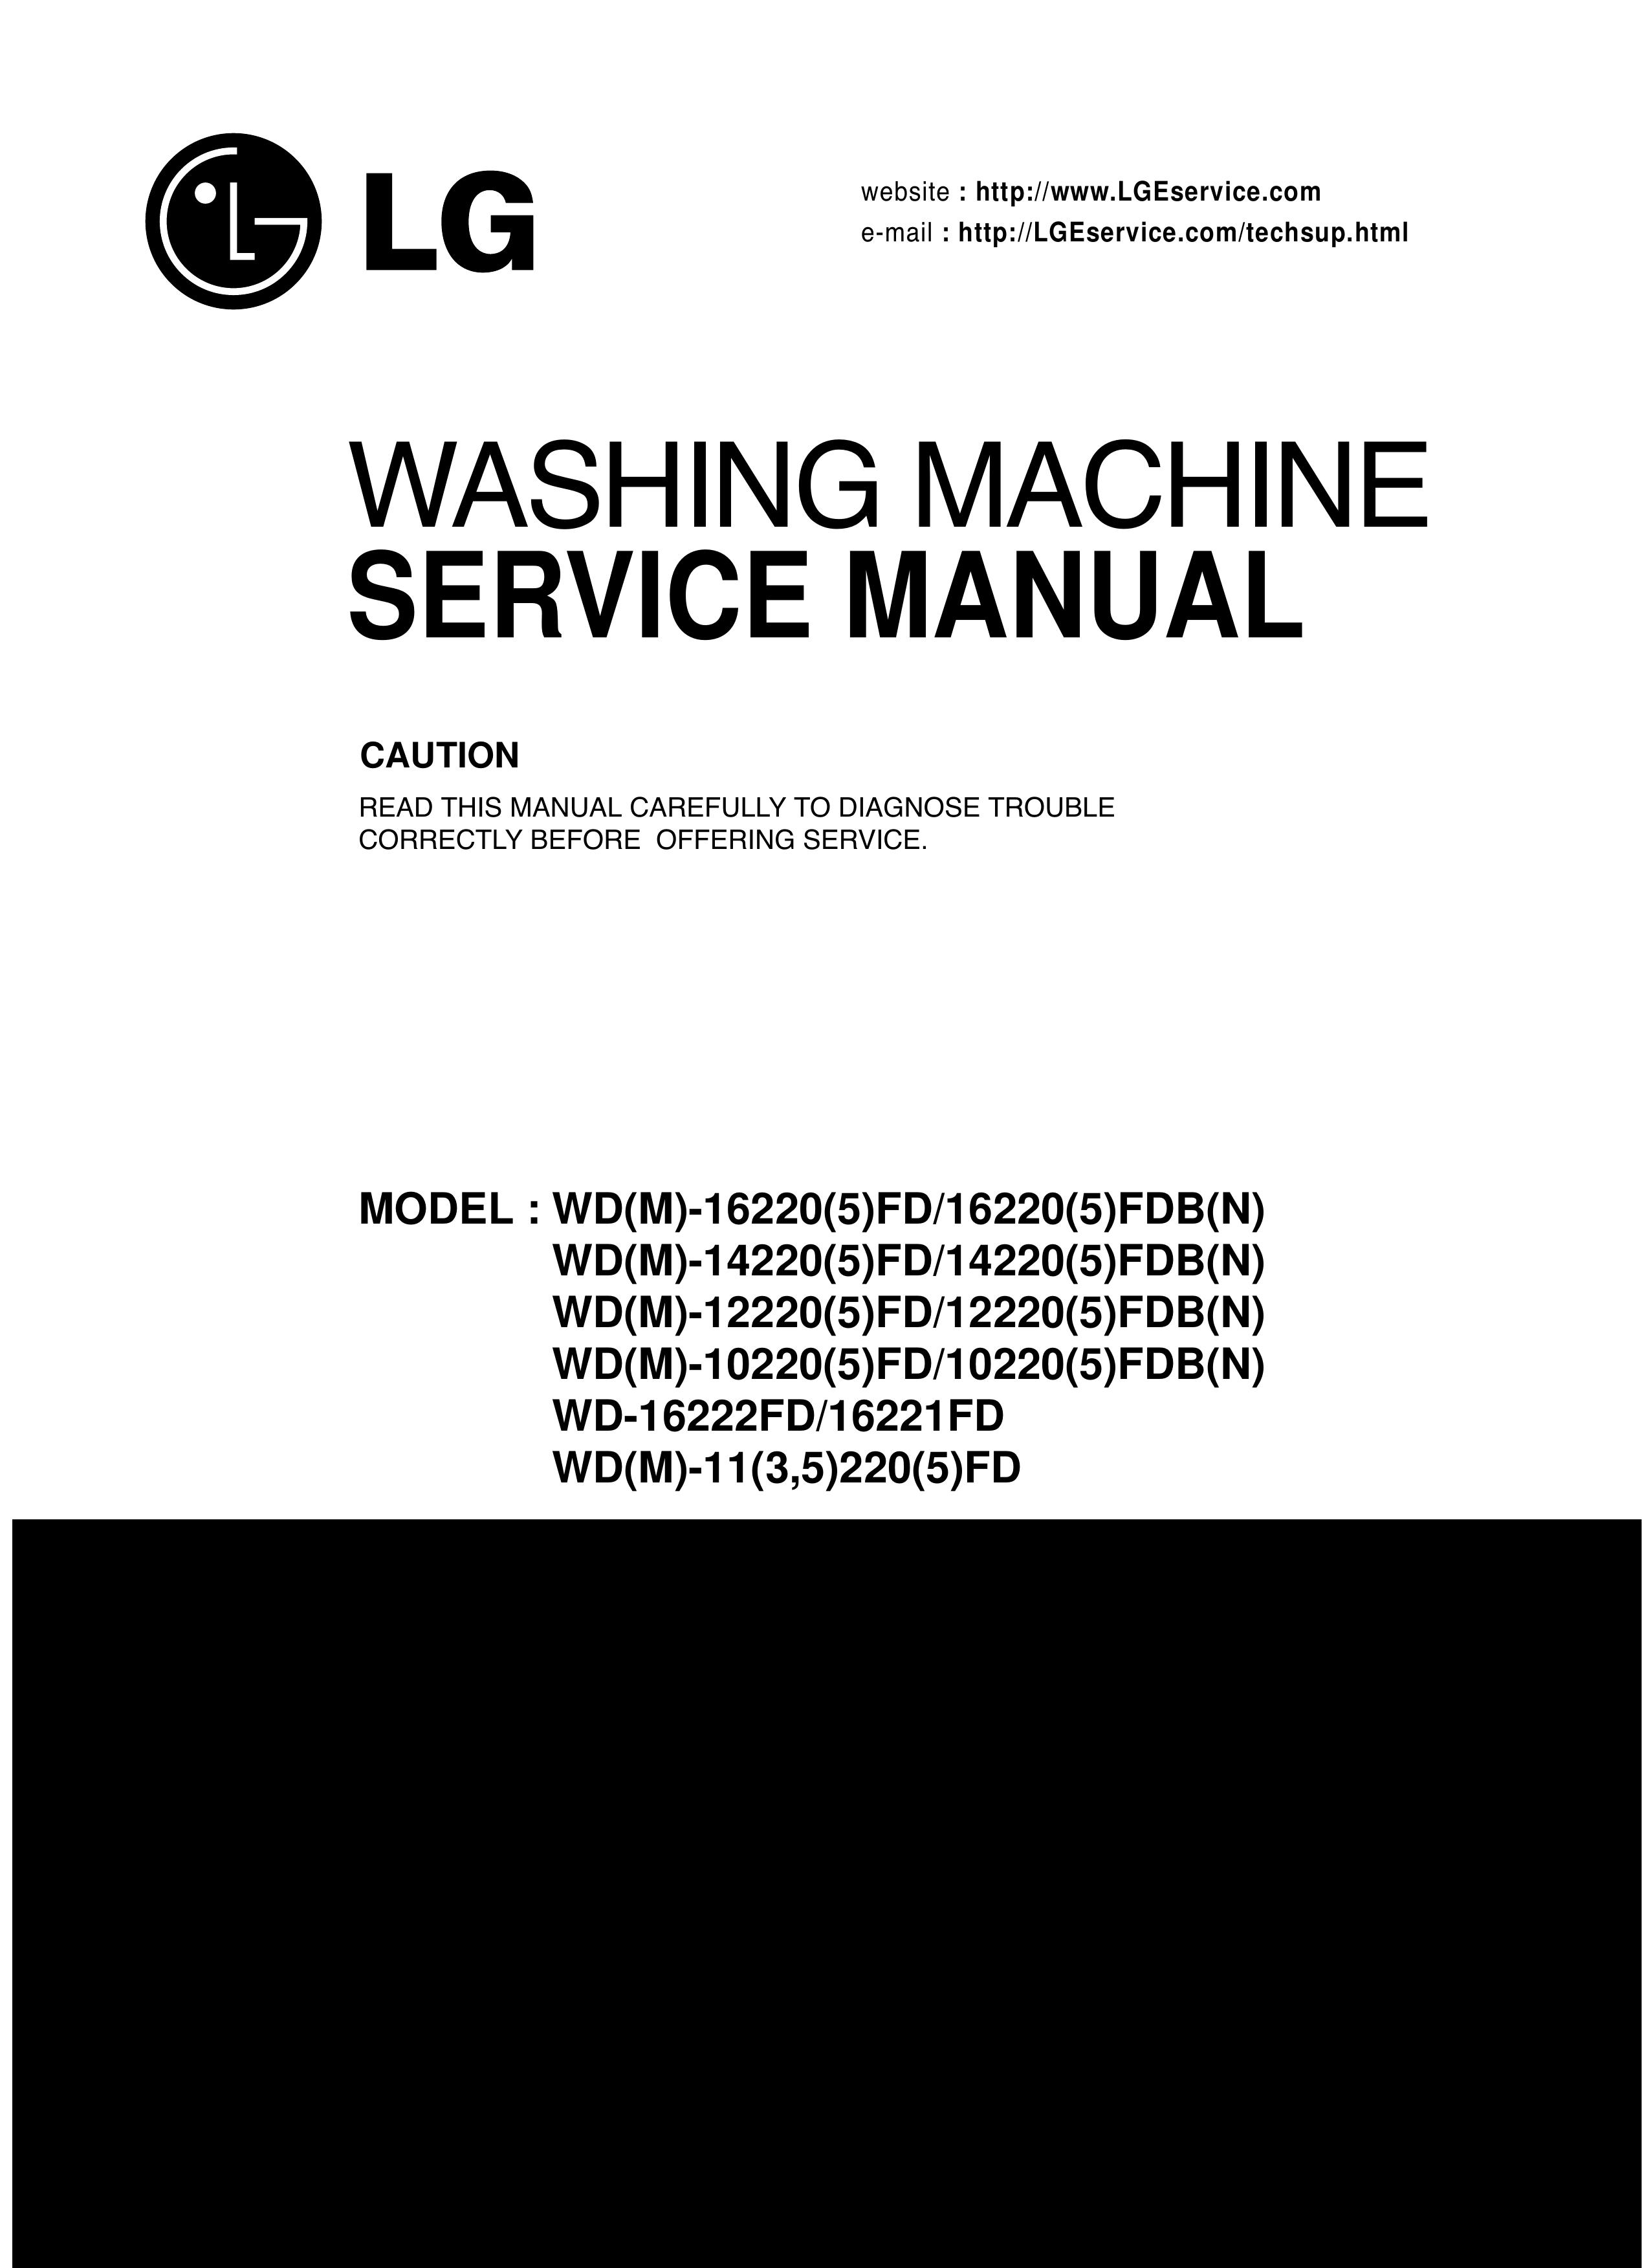 LG Electronics 10220(5)FDB(N) Washer User Manual